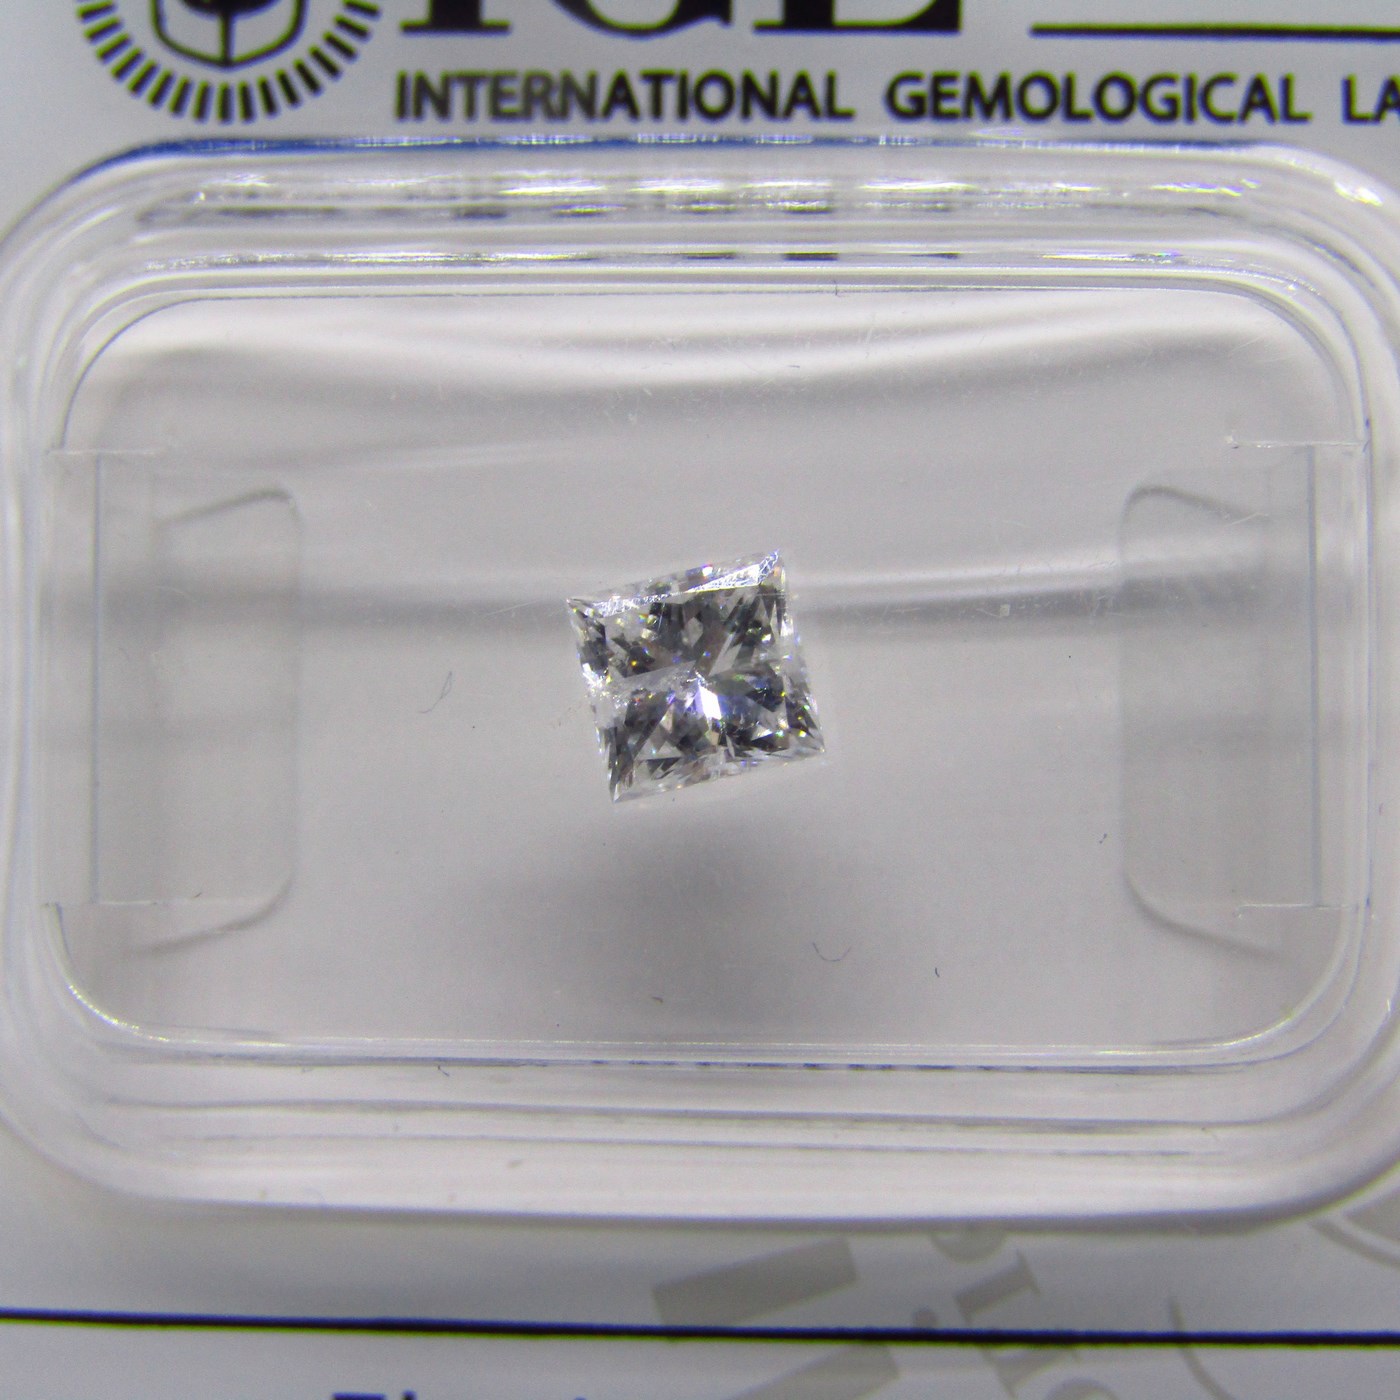 Evaluación Magistrado hermosa Diamante Natural talla Princesa de 0,45 ct. Color, D. Pureza, SI2.  Certificado IGL Subastas Fígaro